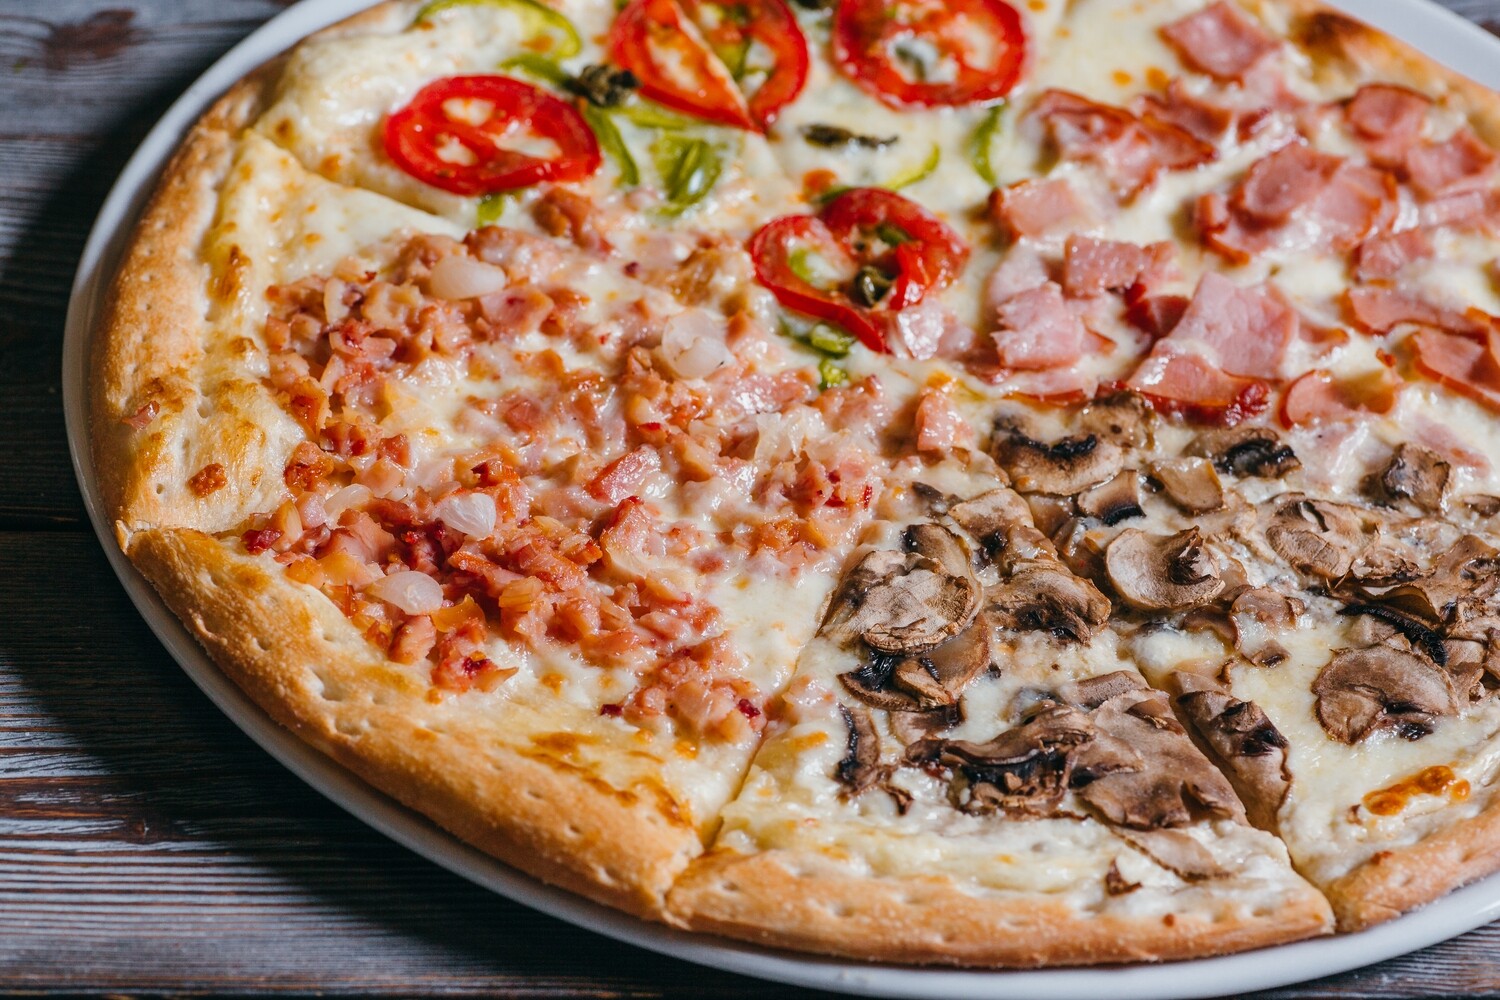 Пицца кватро стаджиони калорийность